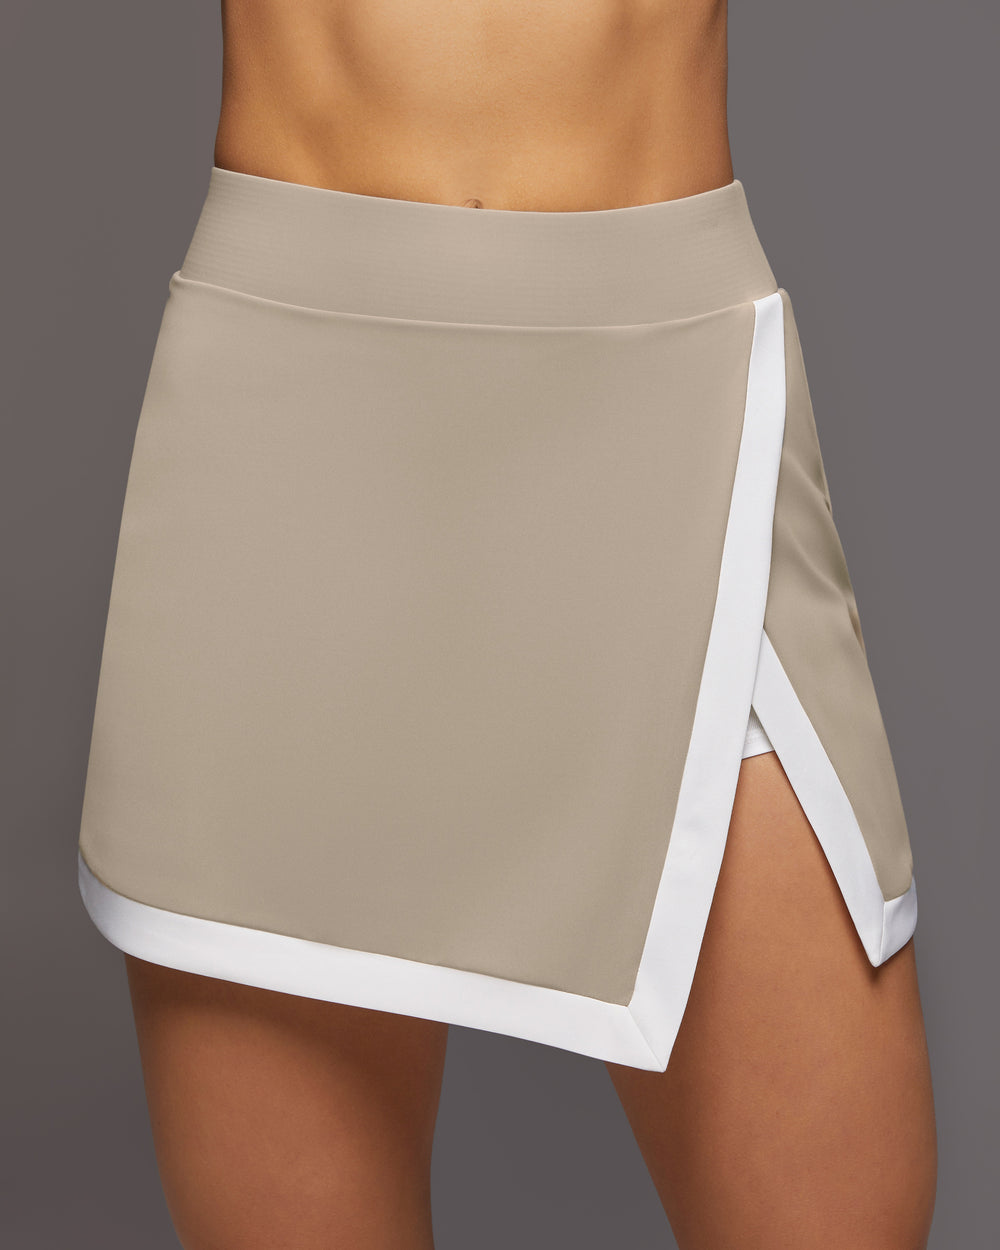 Shop the Rival Golf Skirt W/Shorts | High-fashion Activewear Brand — MICHI